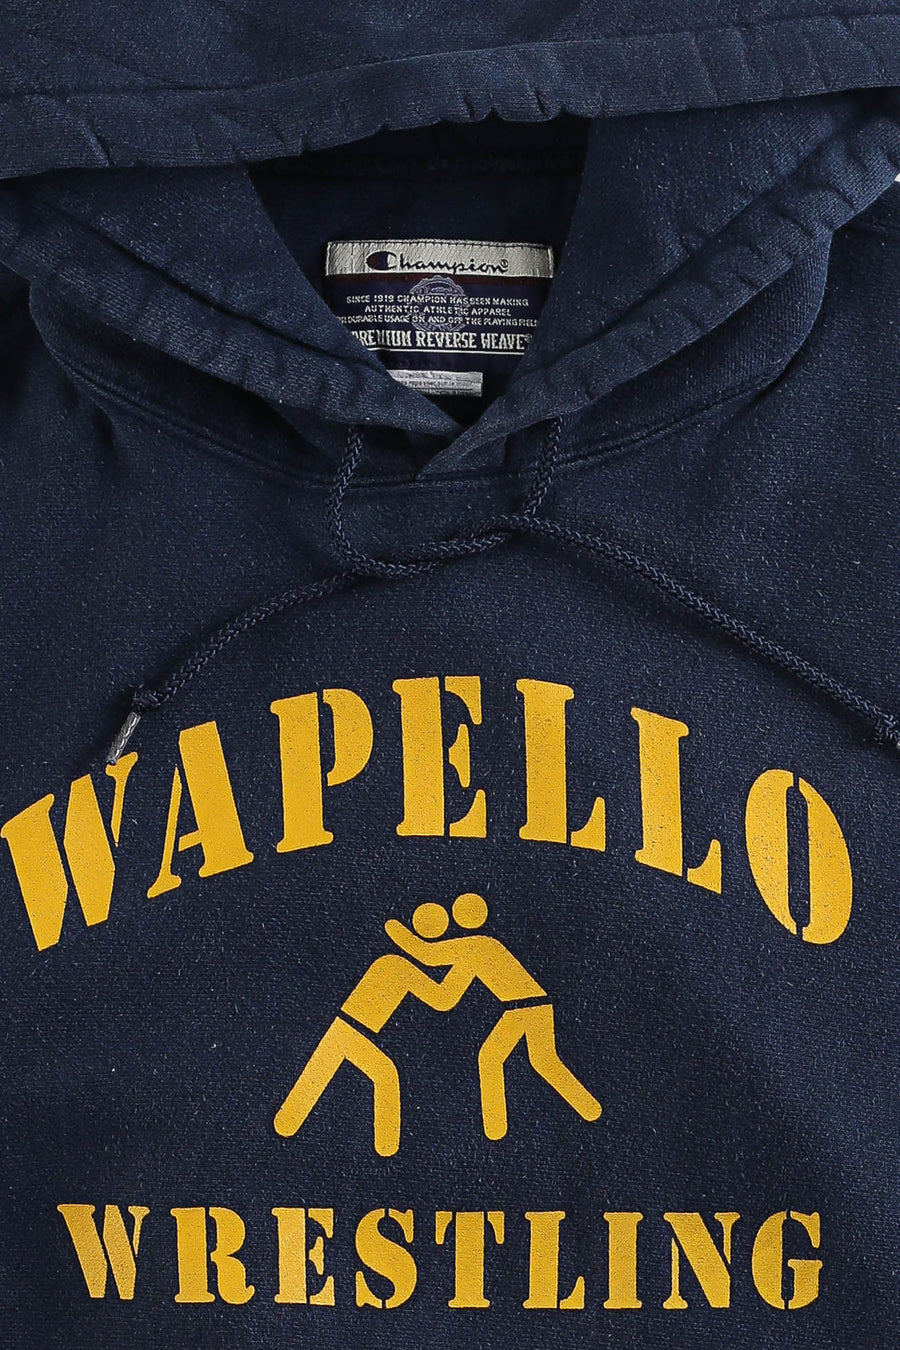 Vintage Wapello Reverse Weave Sweatshirt